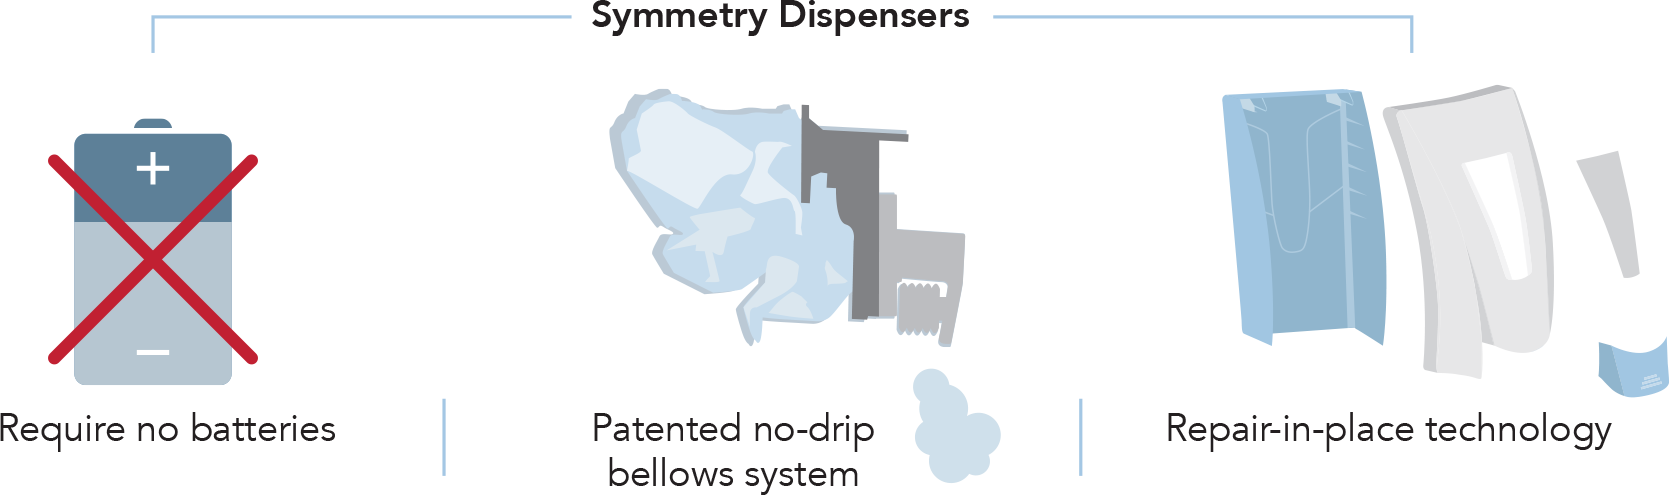 Symmetry Dispensers do not require batteries